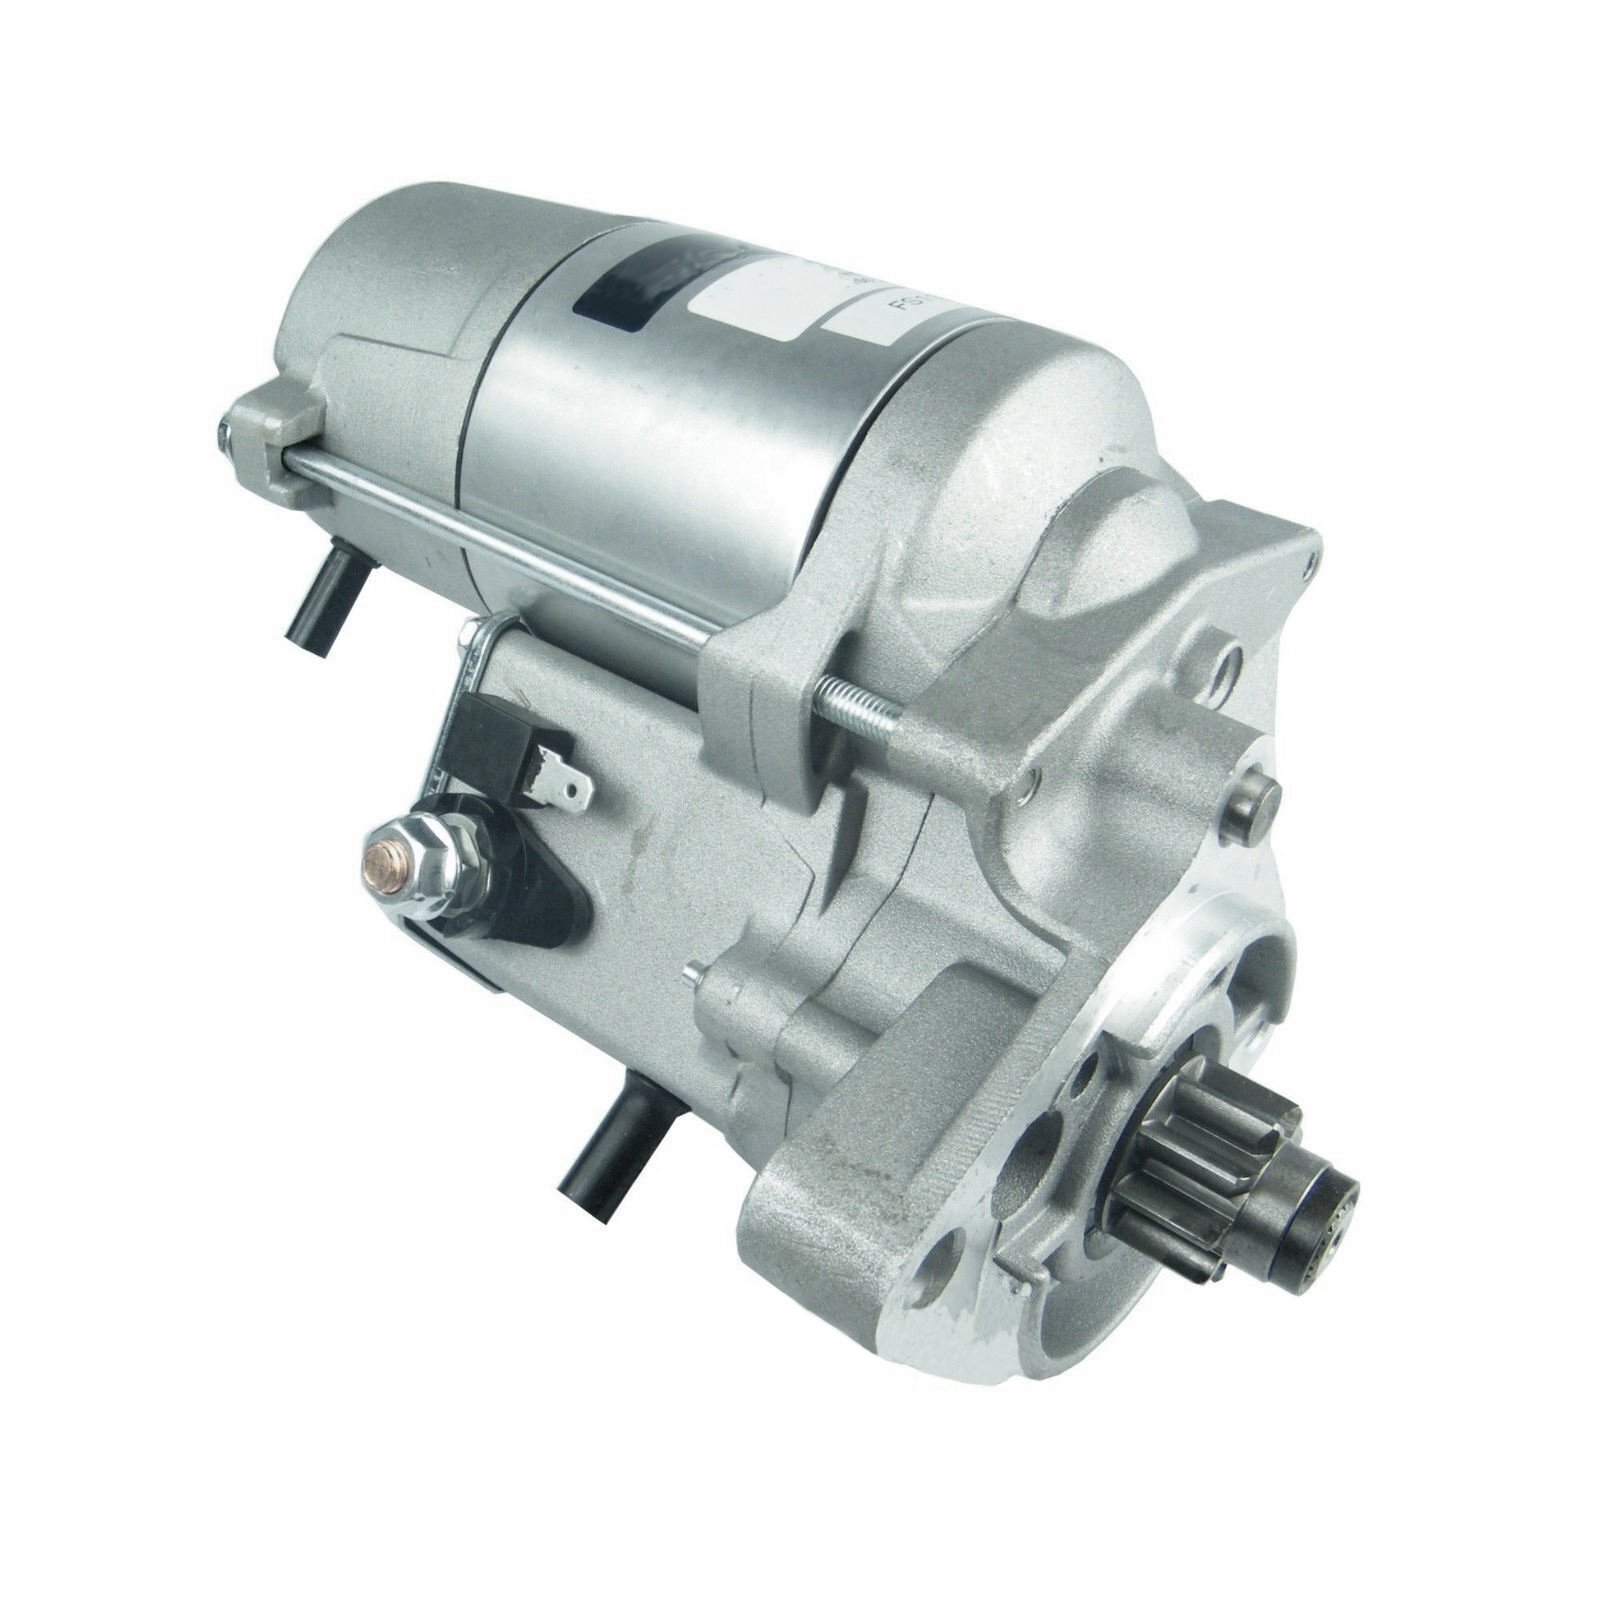 Bomcomi Diesel Starter Motor Solenoid Repair Compatible for Discovery TD5 2.5 228000-7220 NAD101240 